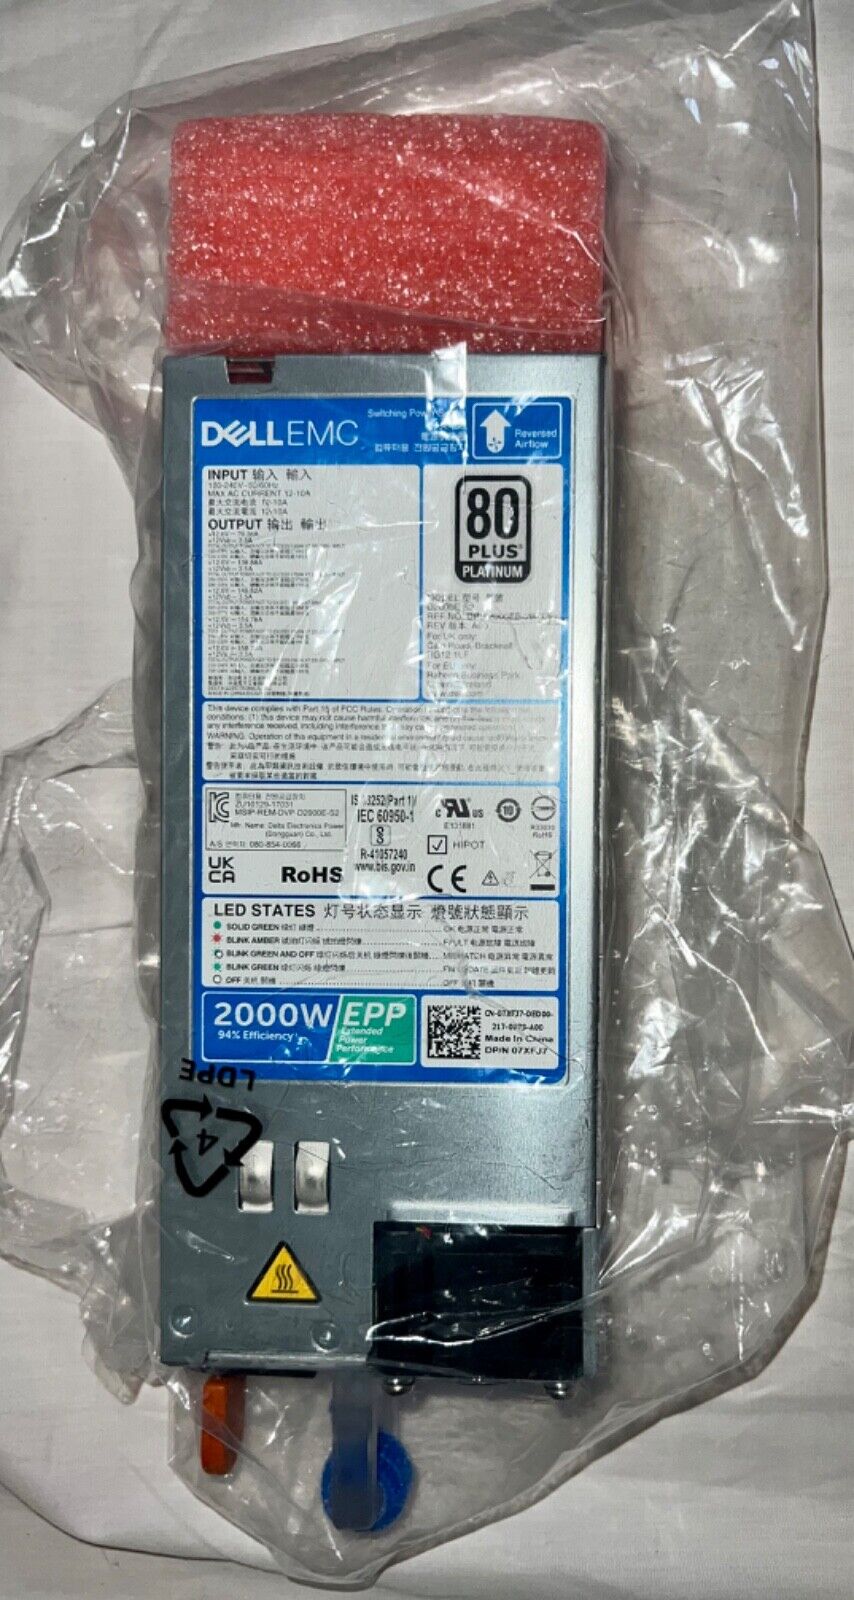 Original New Dell EMC PN 7XFJ7 XE2420 2000W D2000E-S2 Server Power Supply